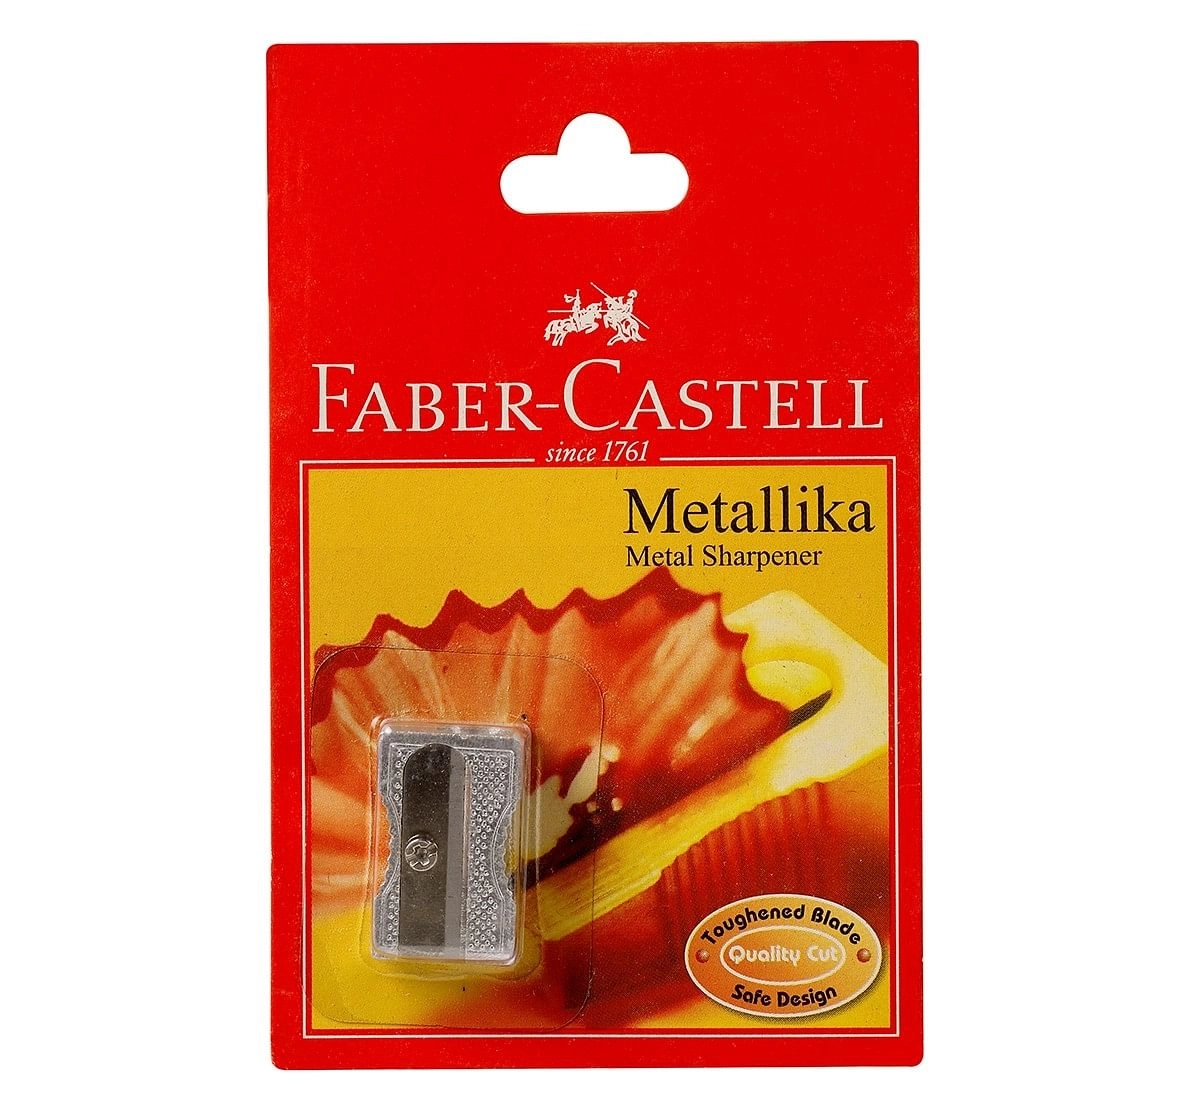 Faber-Castell Metal sharper, 10Y+